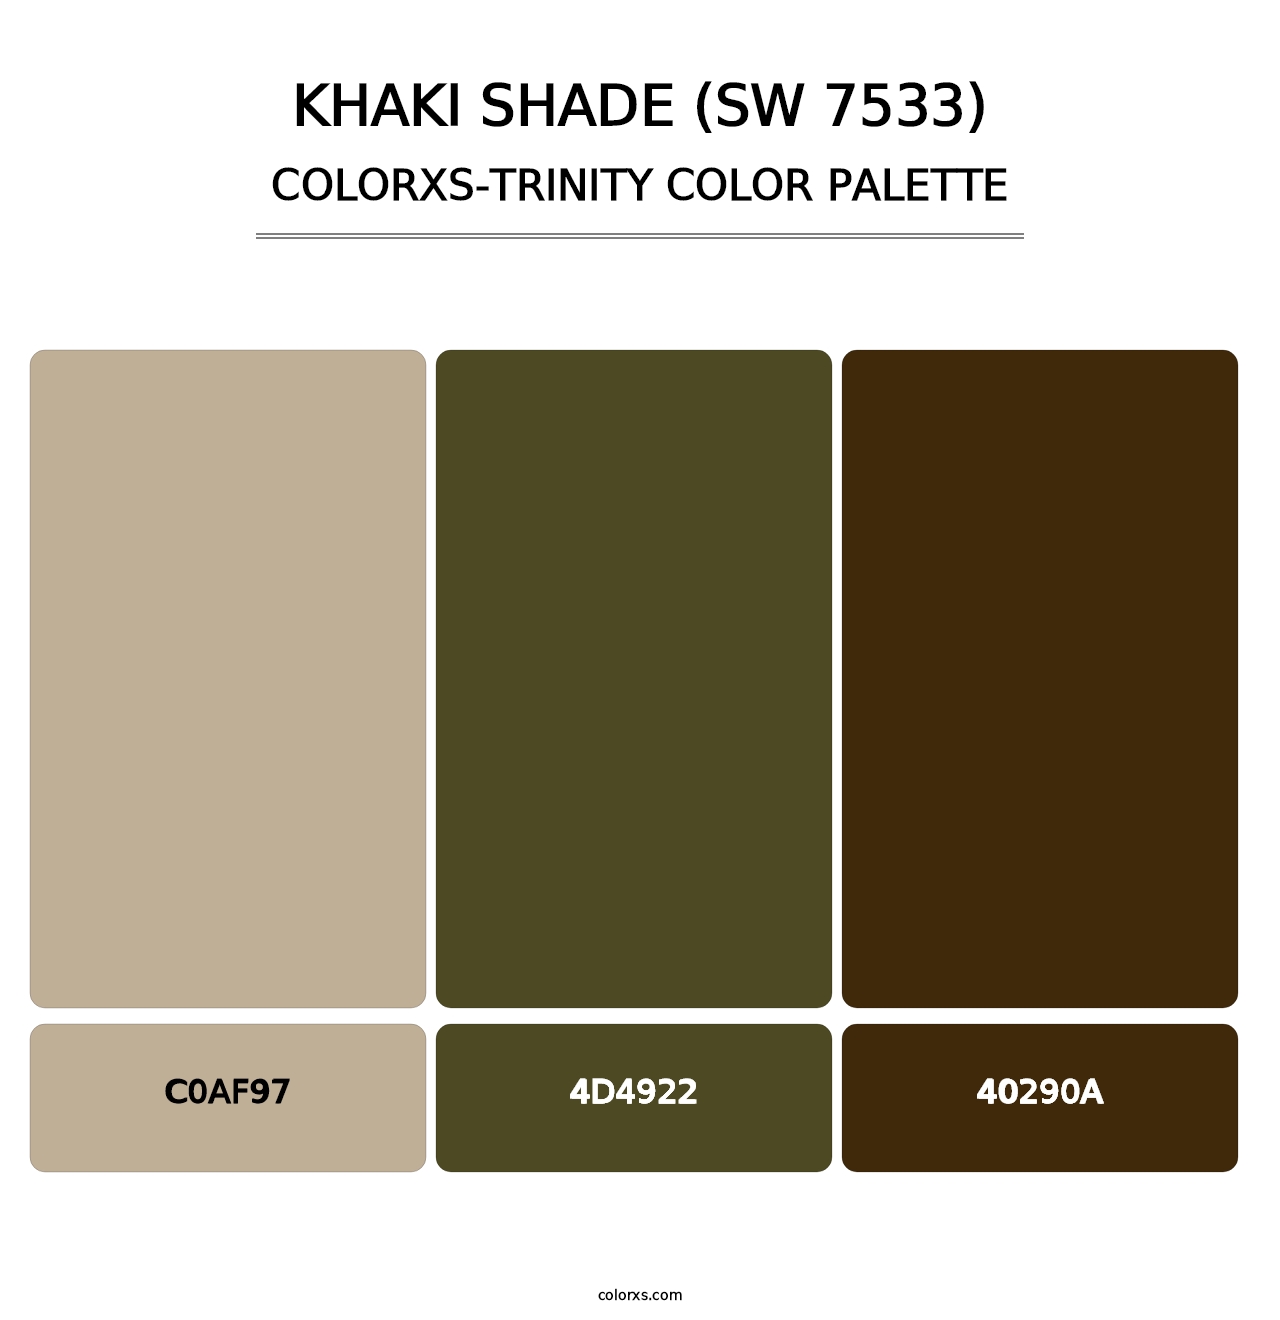 Khaki Shade (SW 7533) - Colorxs Trinity Palette